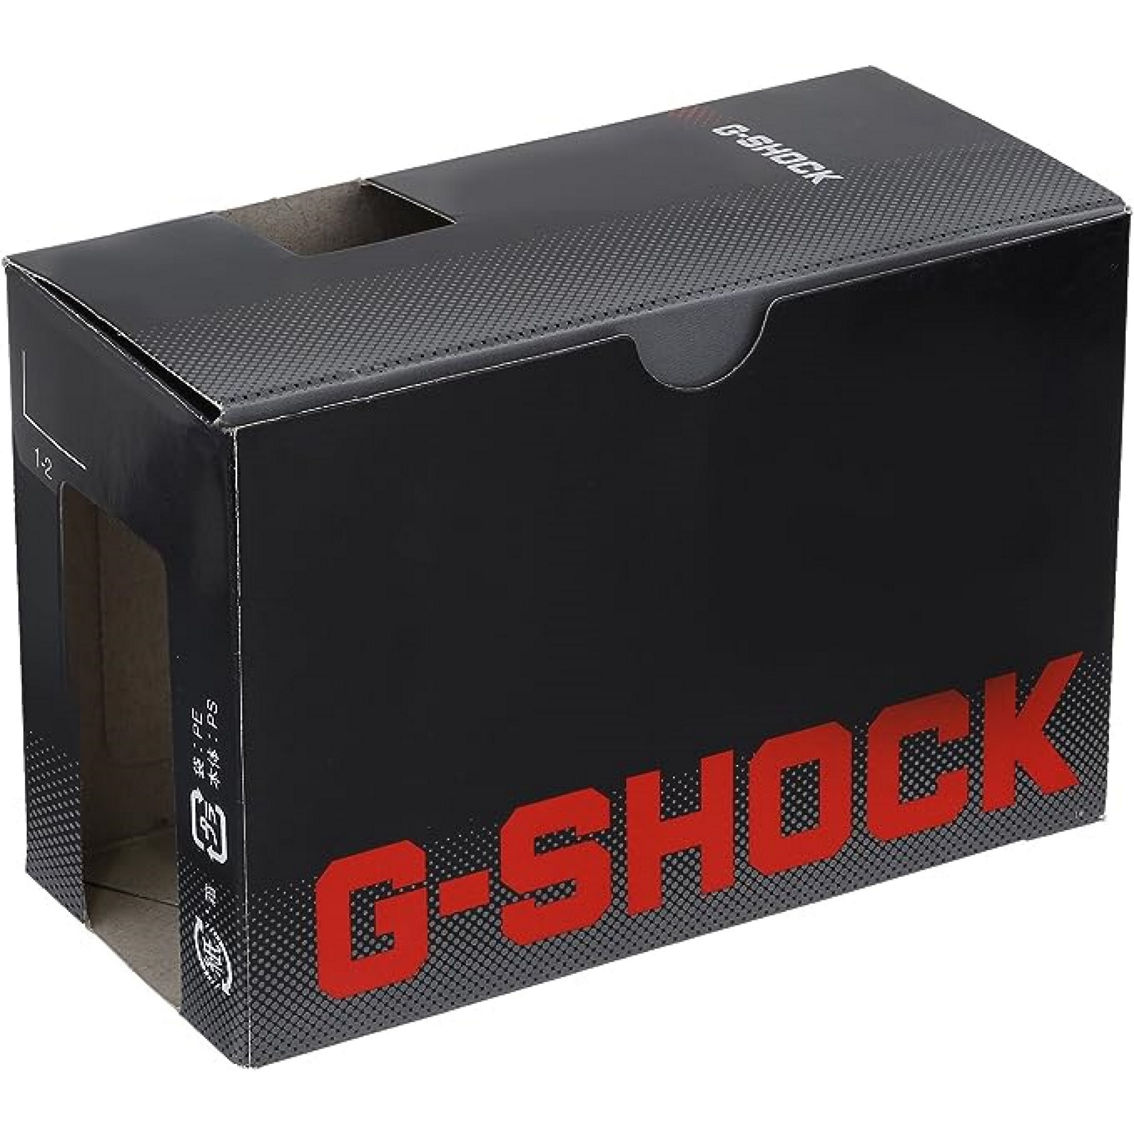 Casio Men's G-Shock Digital Display Quartz Watch GW79001 - Image 2 of 3